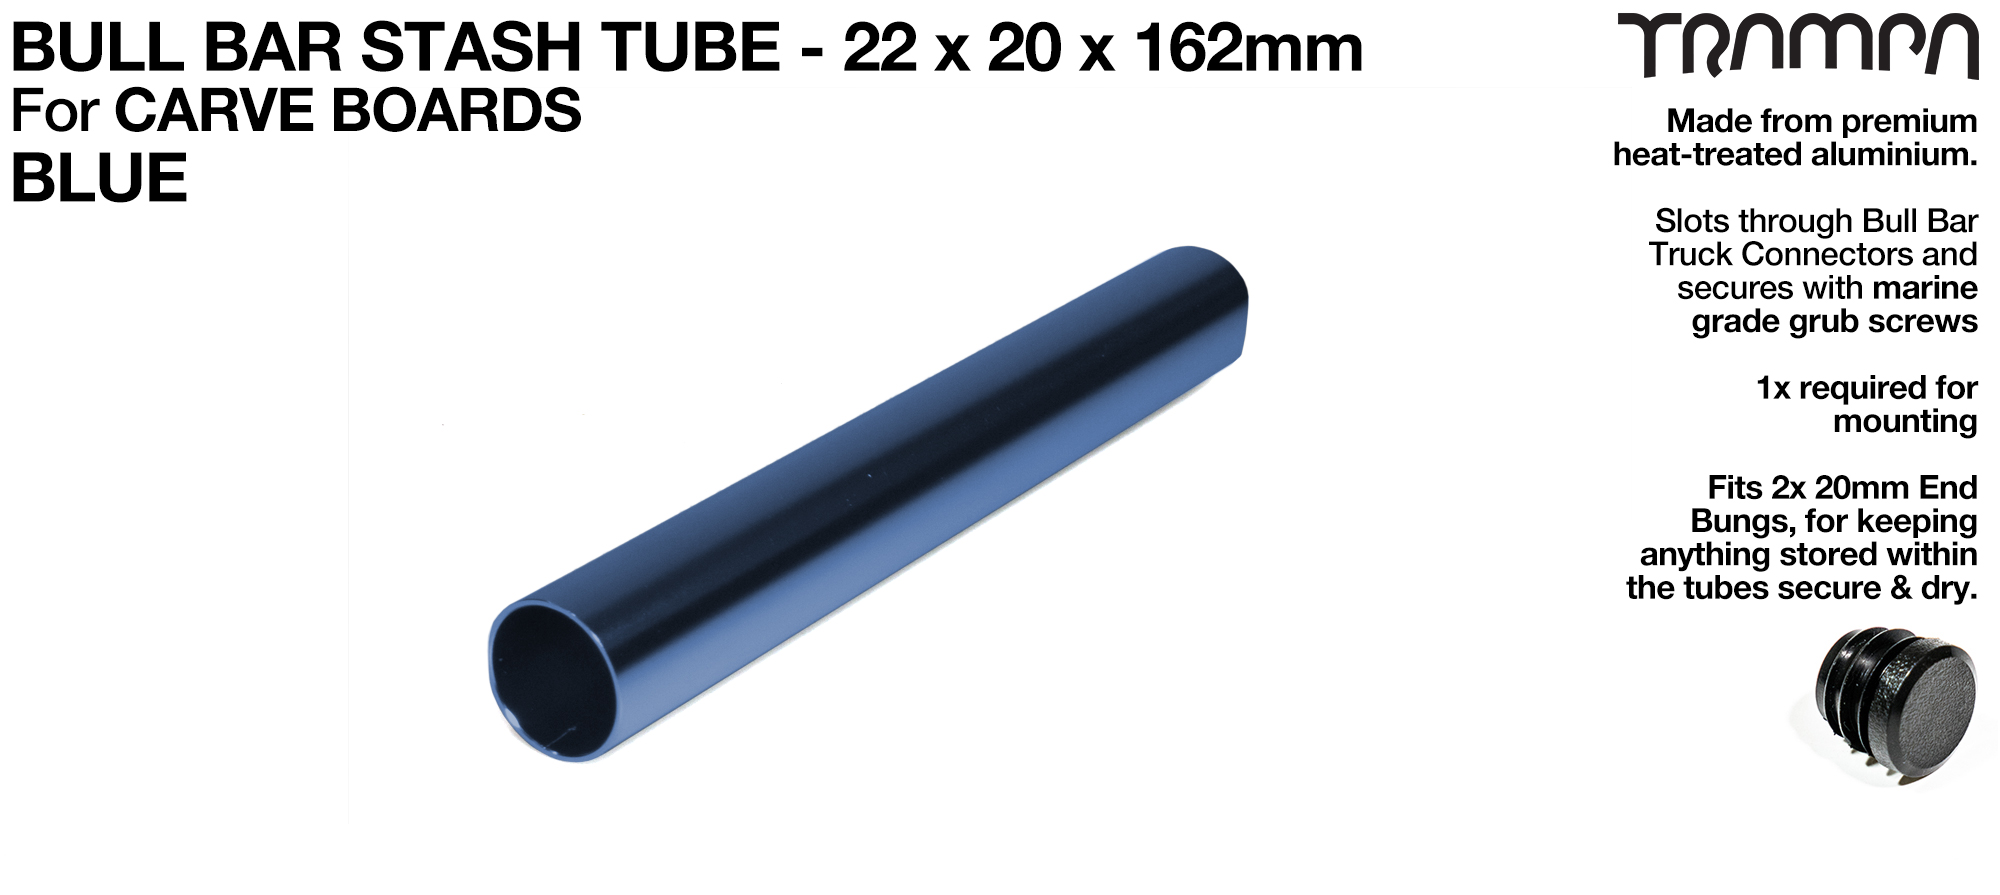 Carve Board Bull Bar Hollow Aluminium Stash Tube - BLUE 22 x 20 x 162 mm 